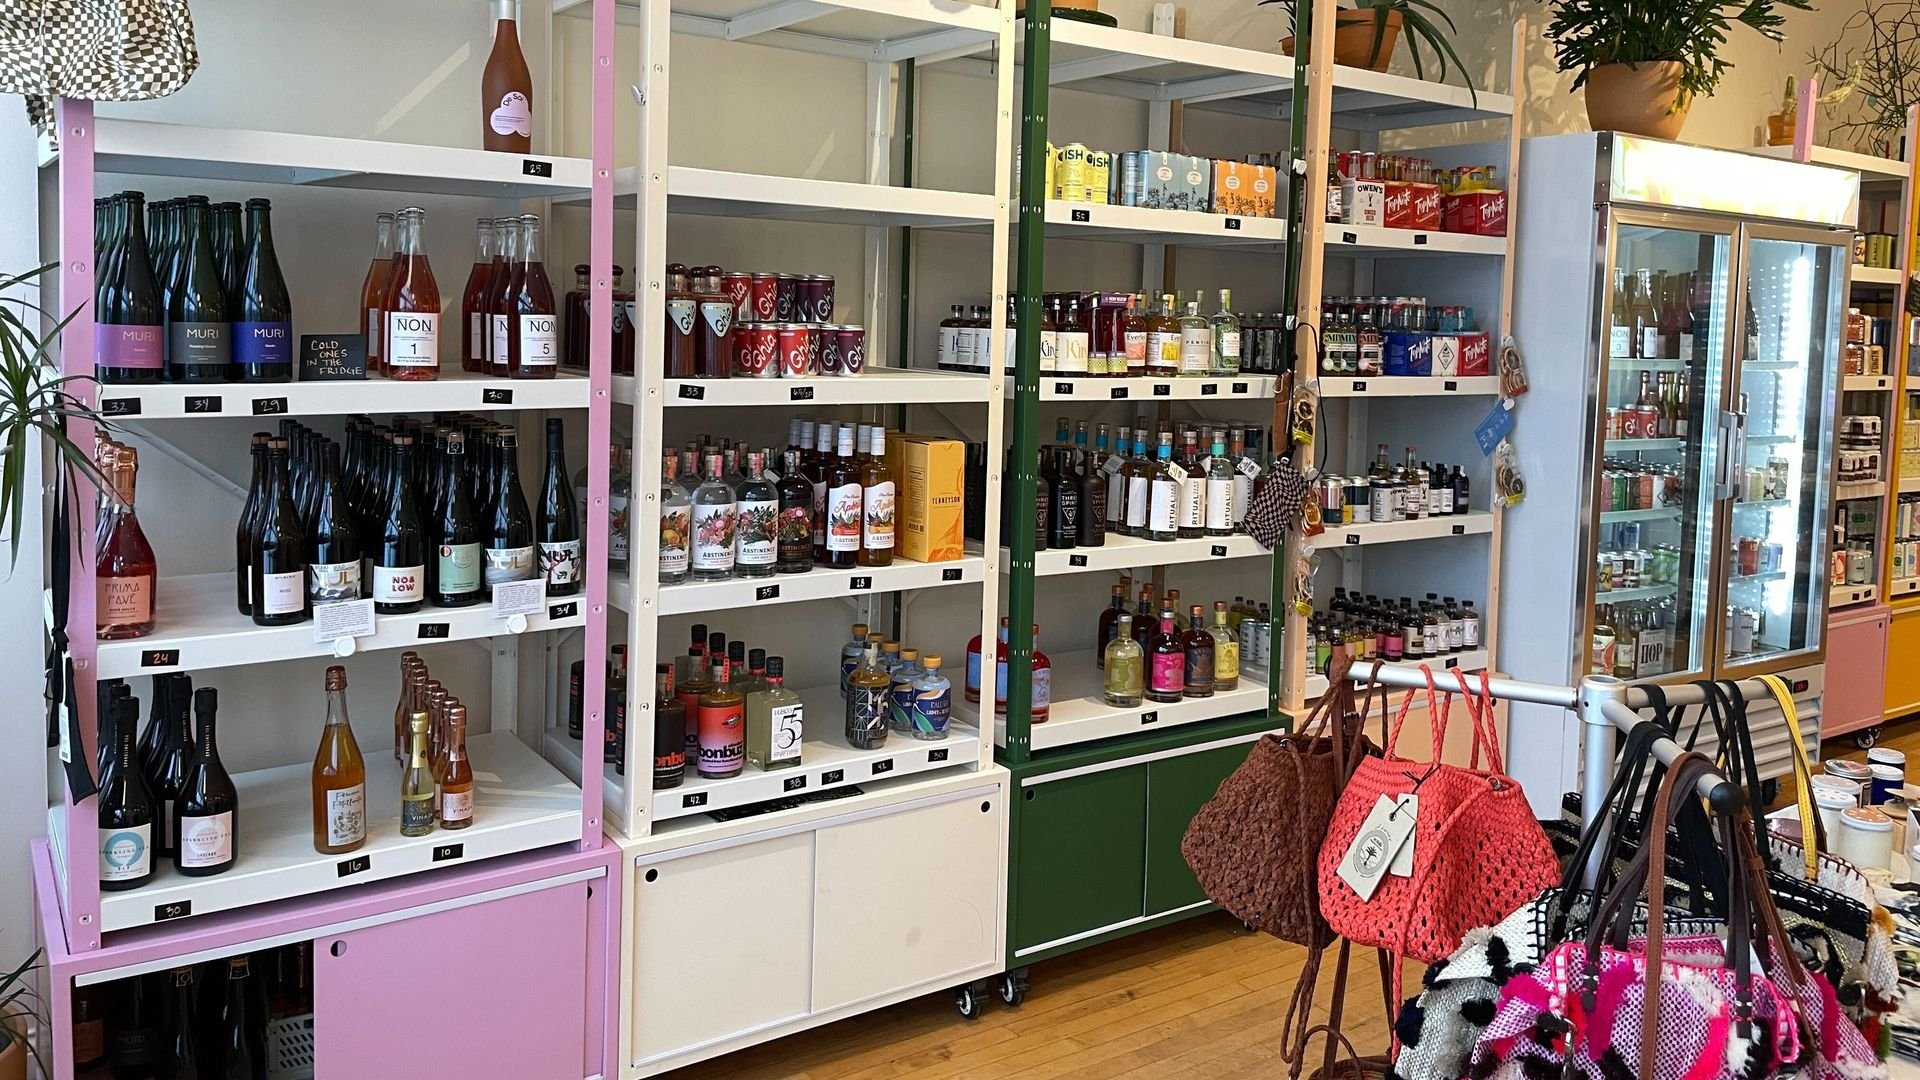 Minneapolis' new bottle shop skips the alcohol